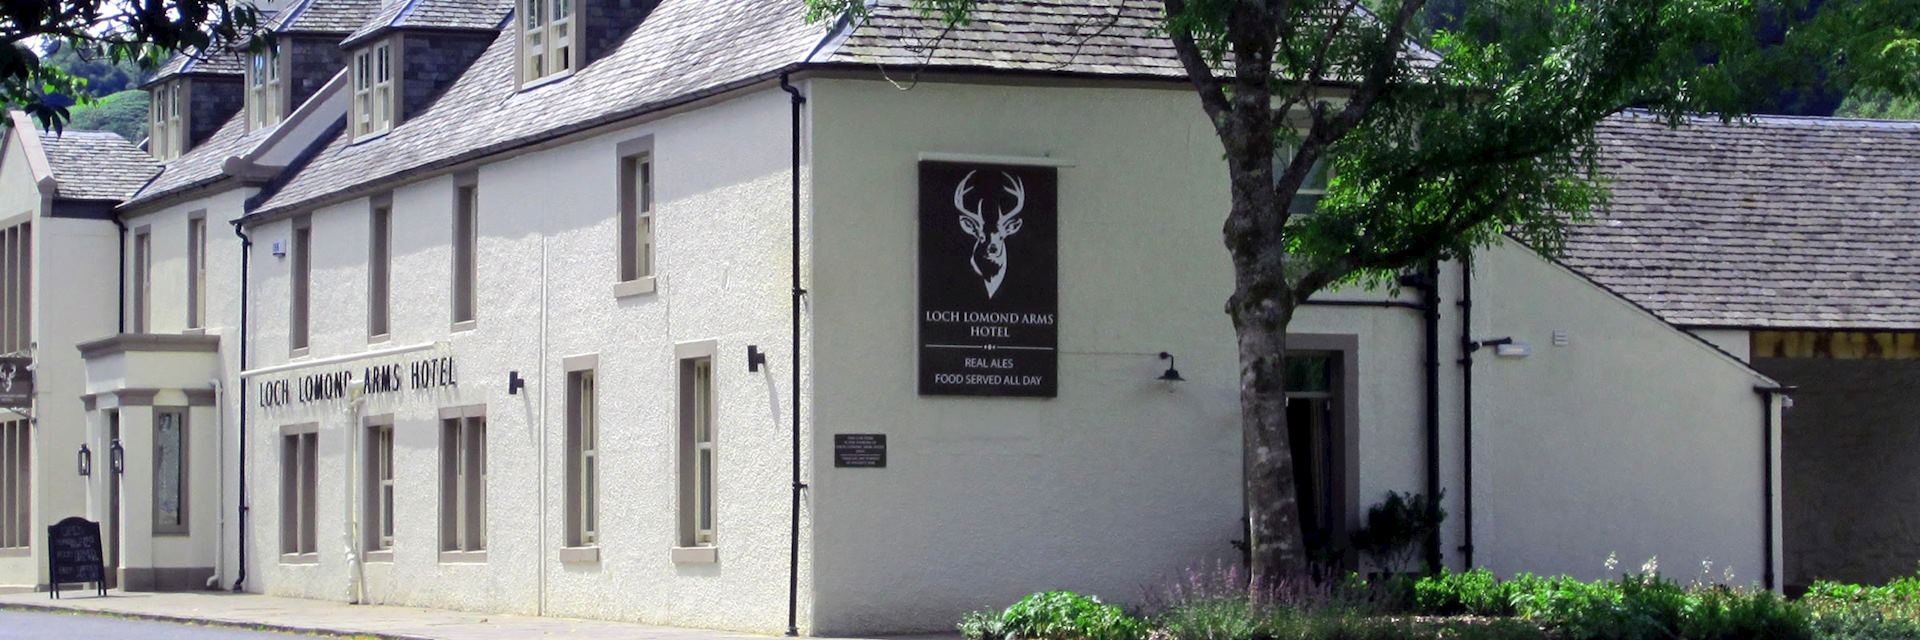 Loch Lomond Arms